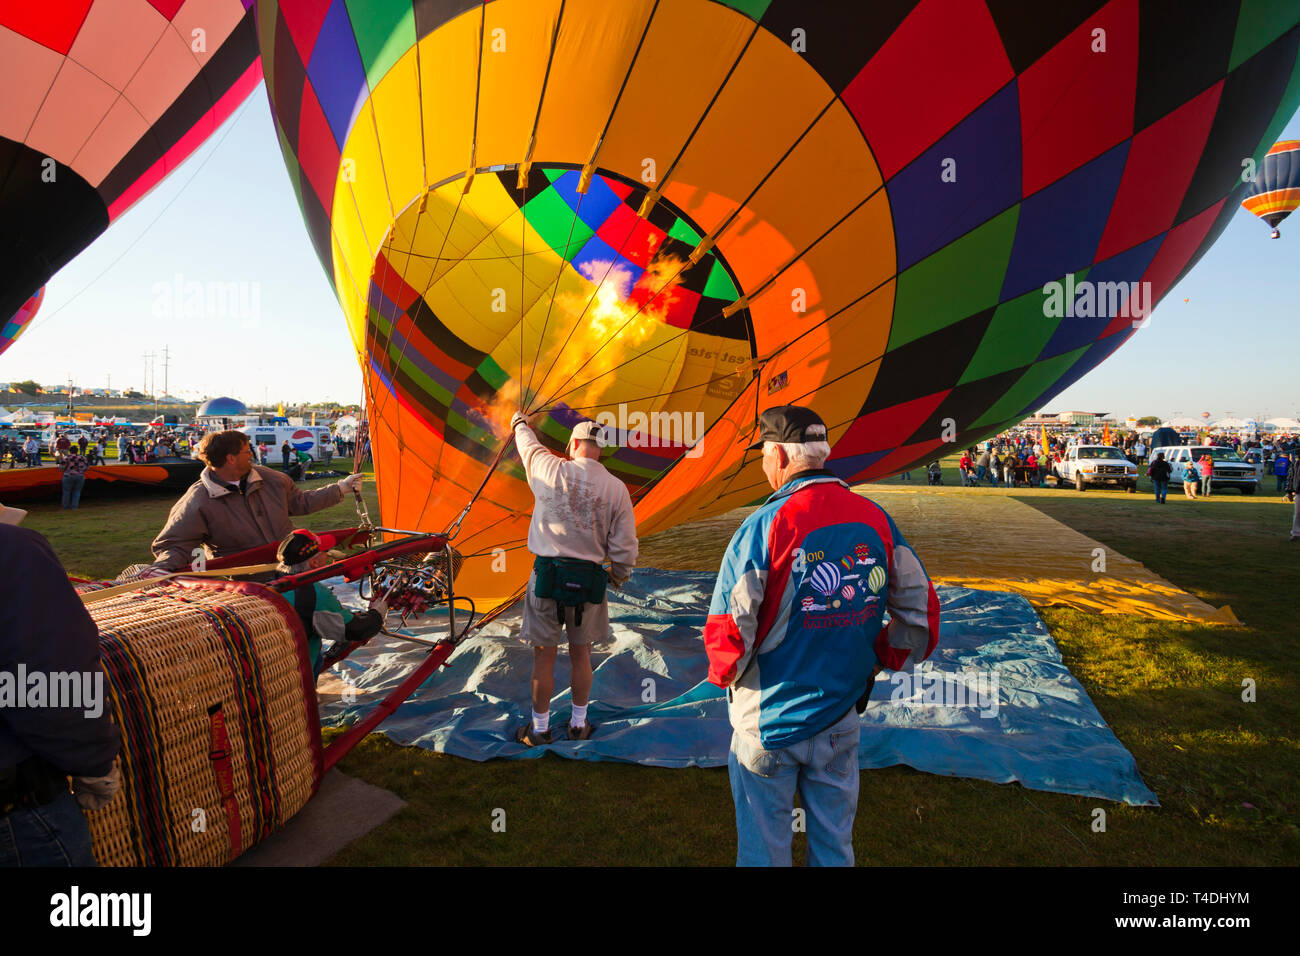 AHot air balloon being set up at the Albuquerque, New Mexico International Hot Air Balloon Festival. Stock Photo